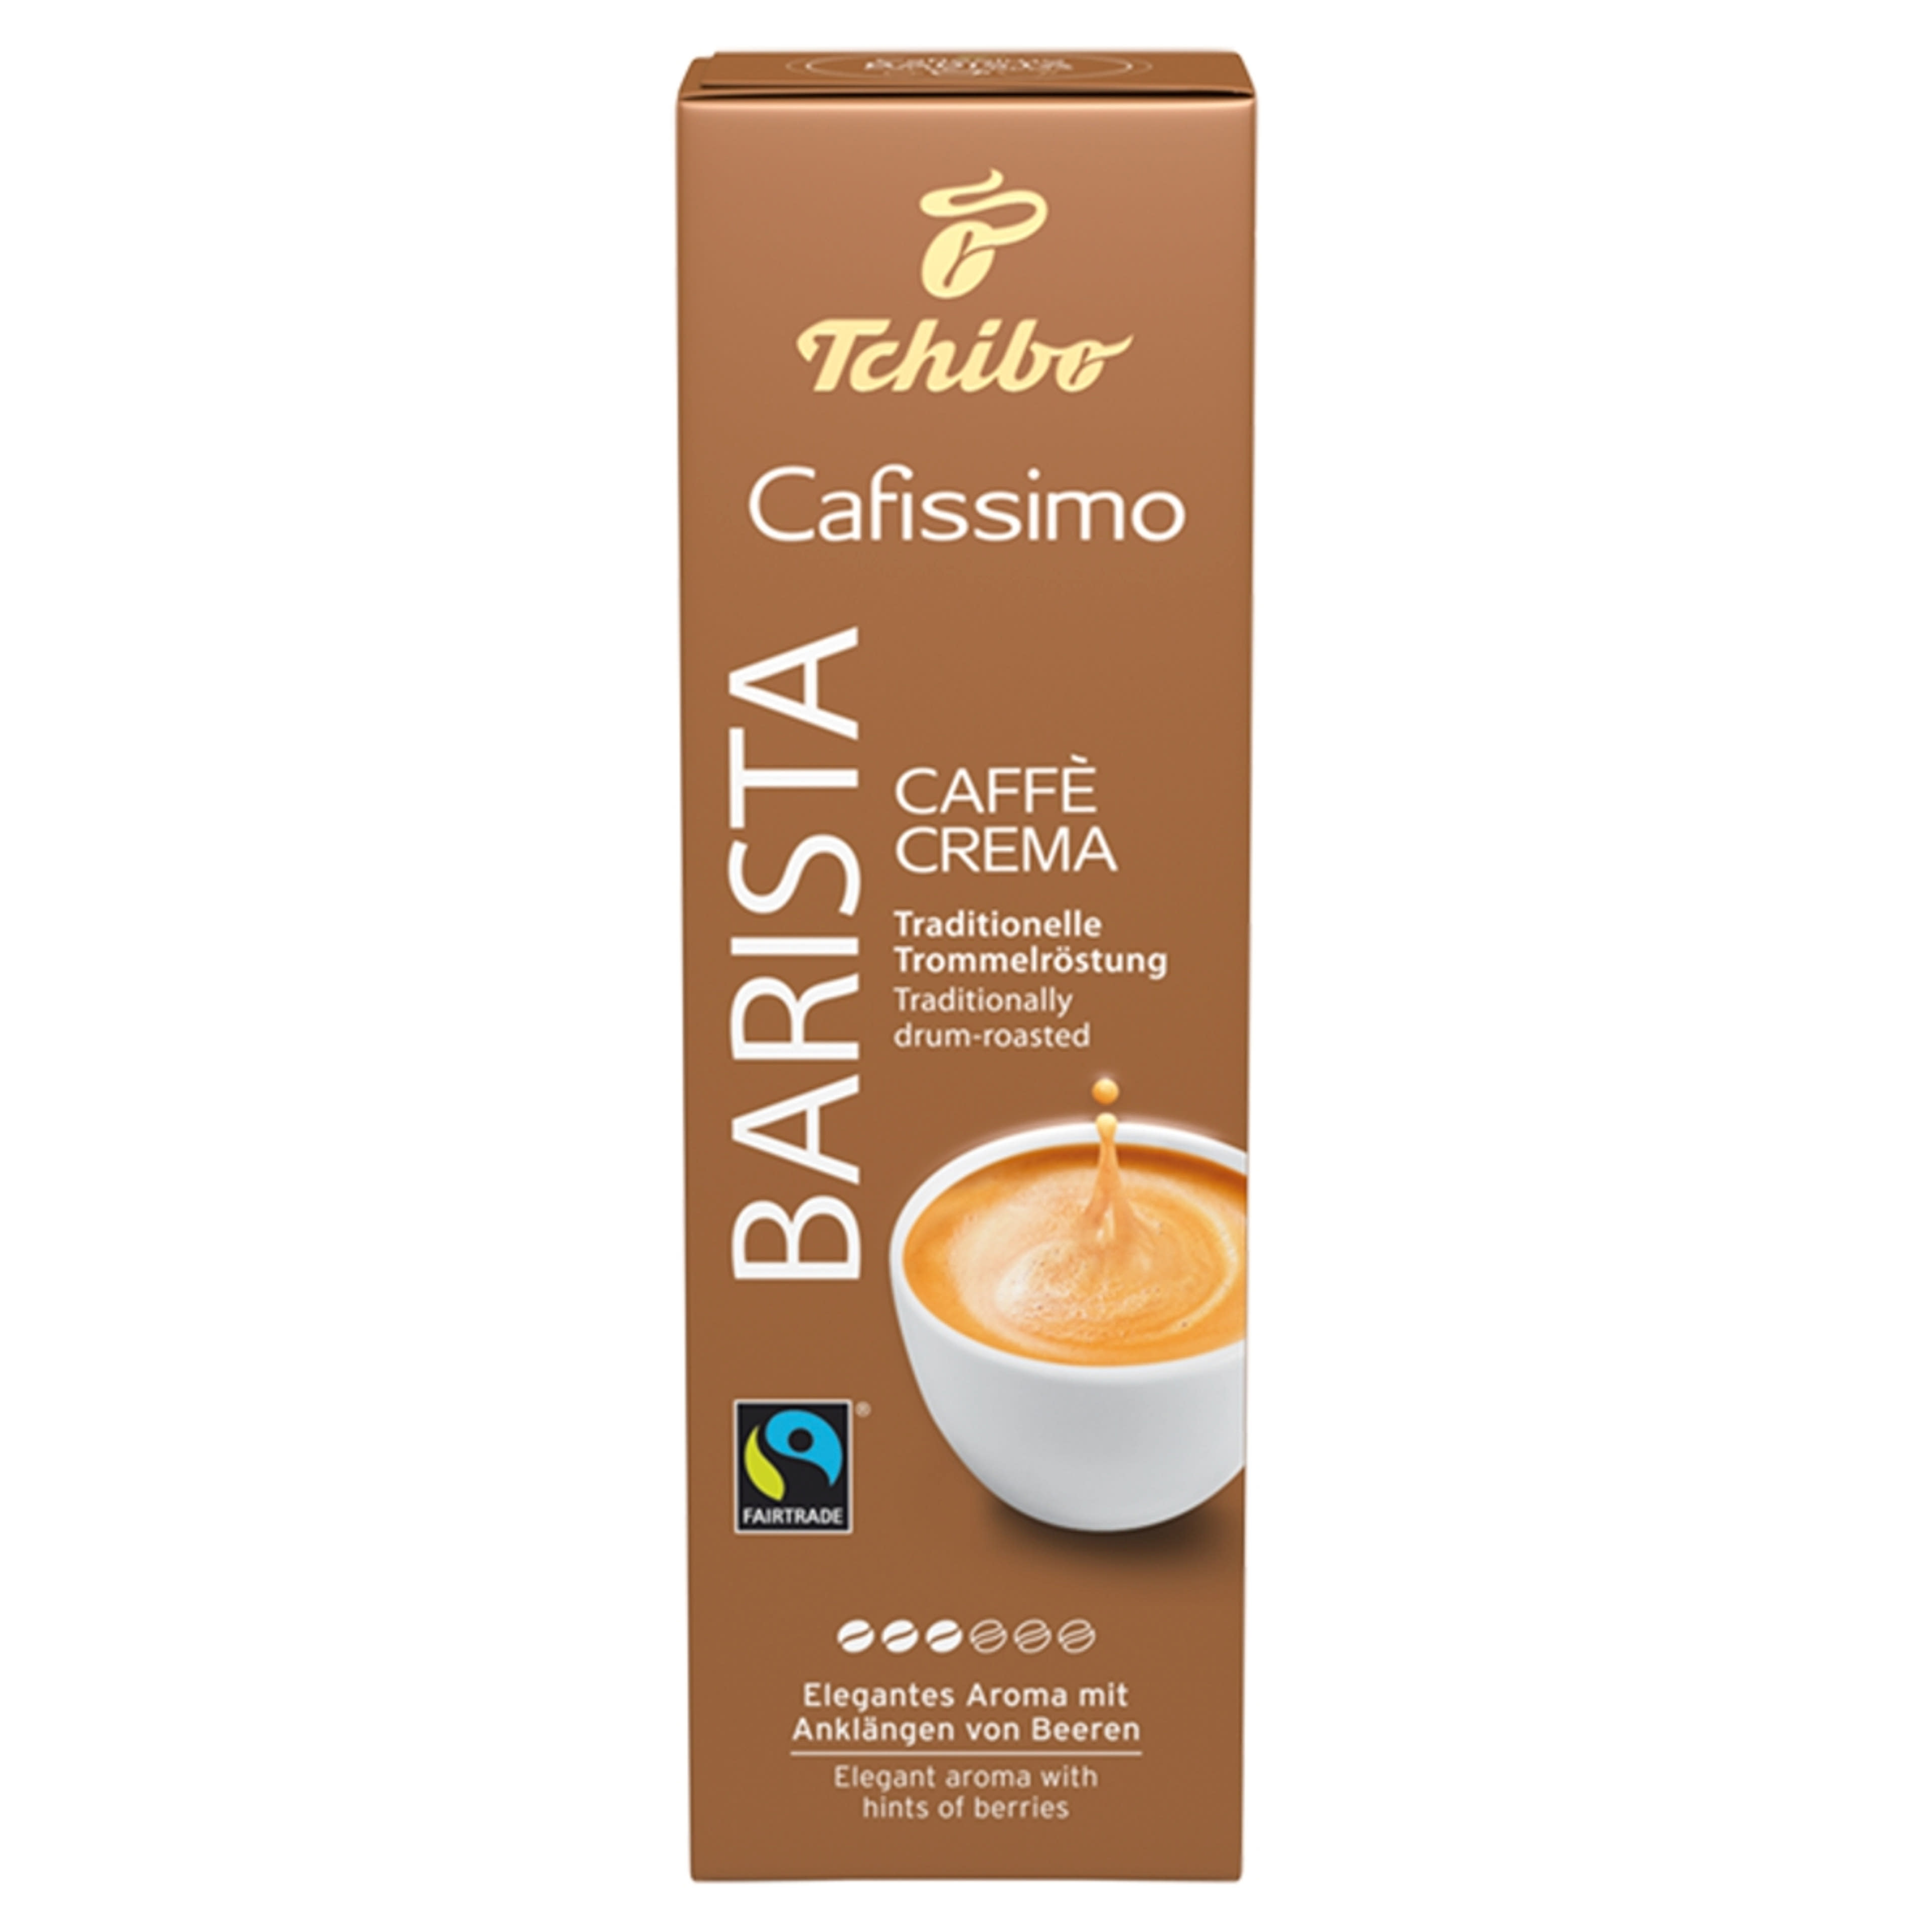 Tchibo Barista Caffee Crema Cafissimo kávékapszula - 10 db